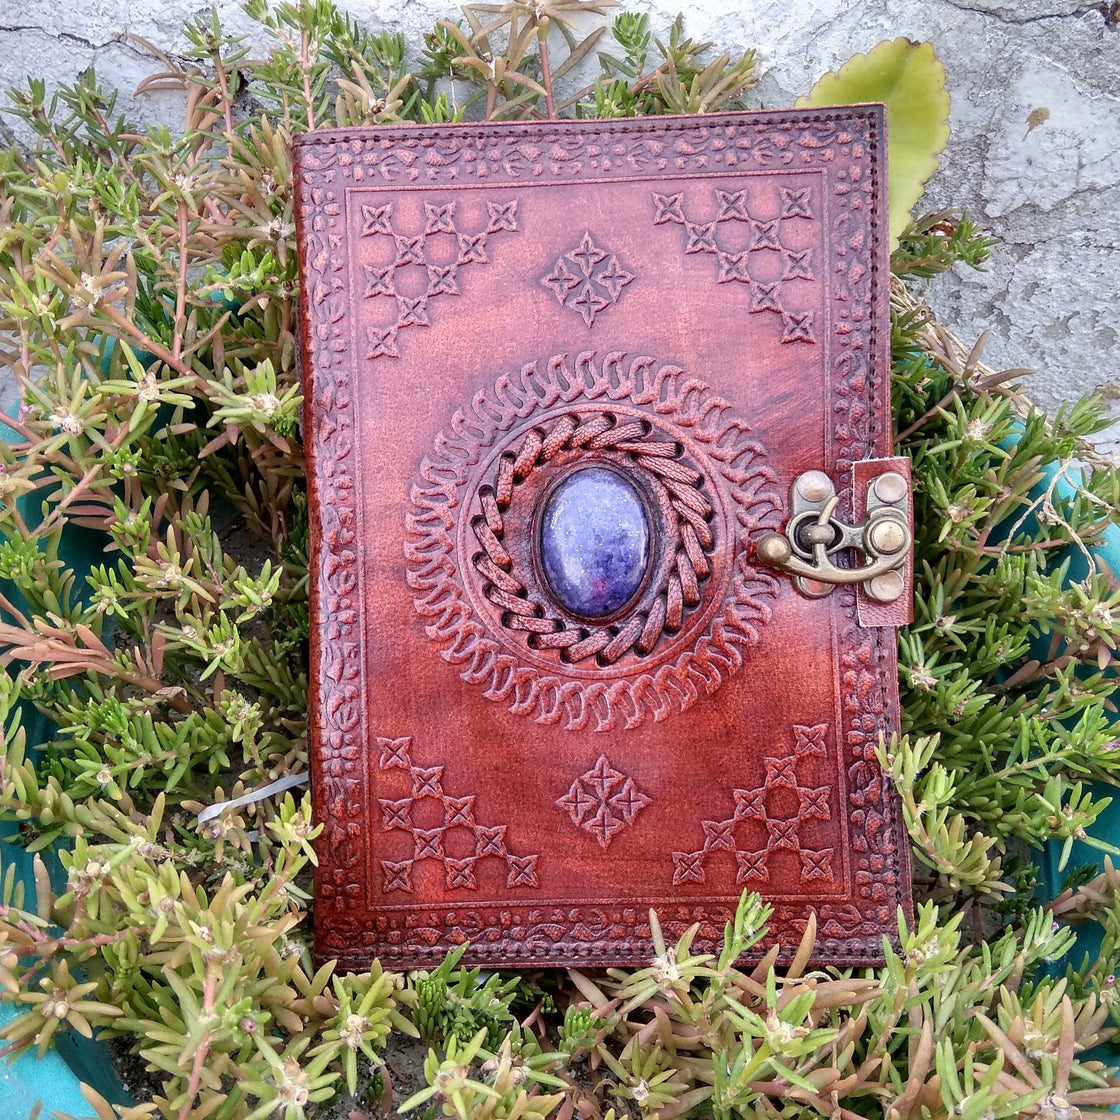 Utopian Leather Journal with Semi-Precious Stone